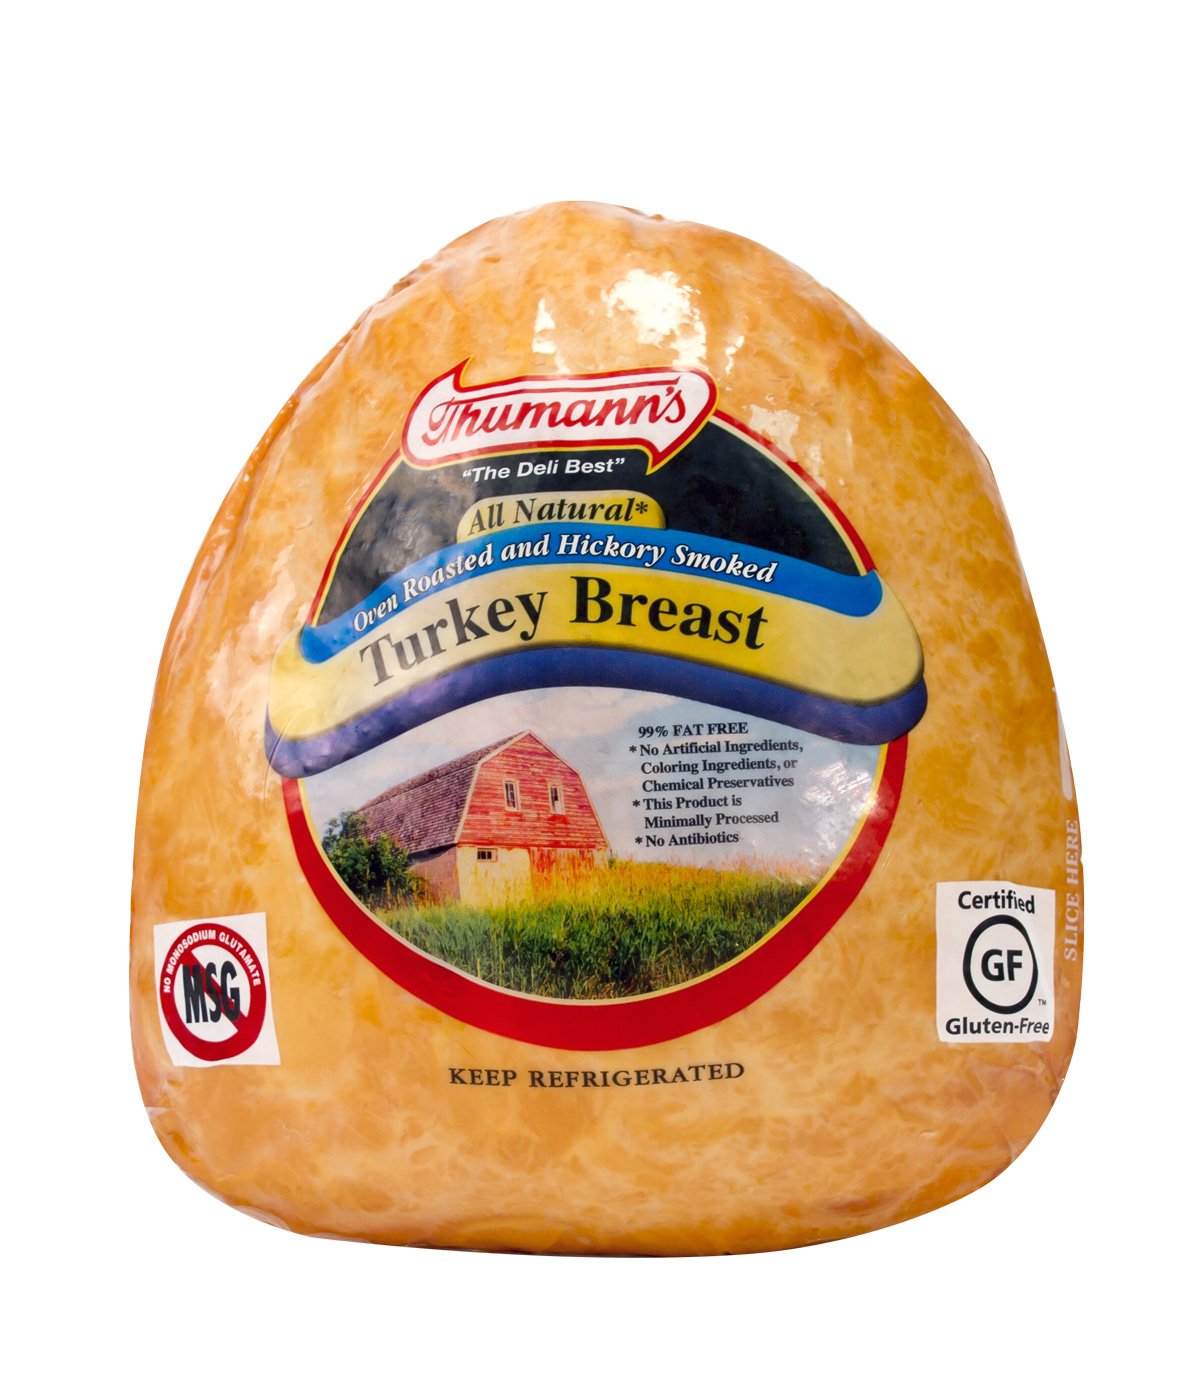 All Natural Hickory Smoked Turkey Breast